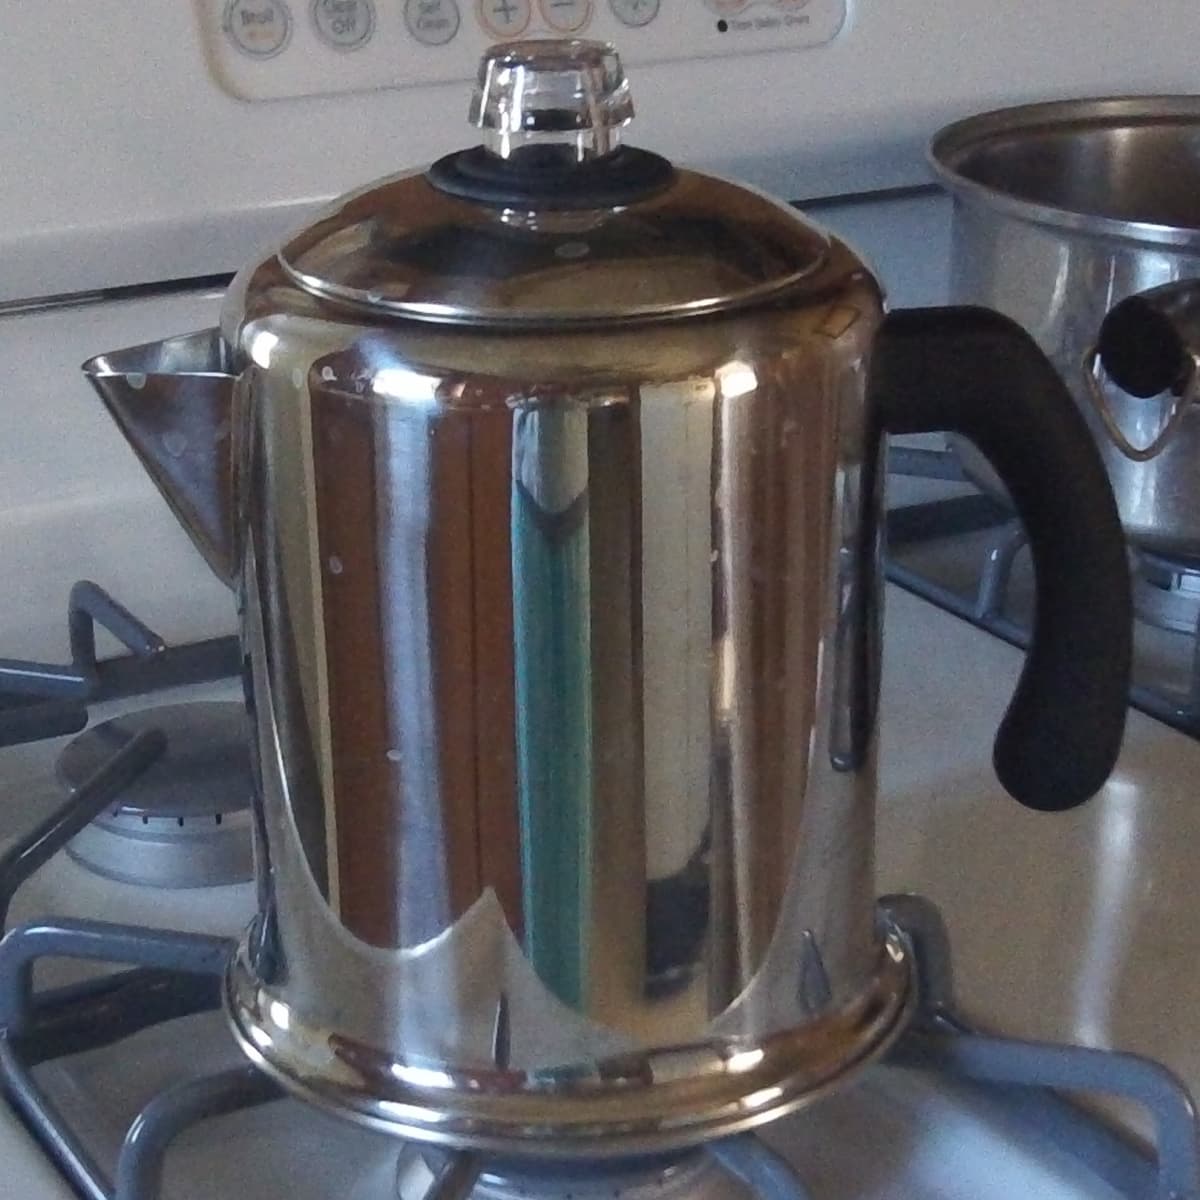 Advantages of a Coffee Percolator